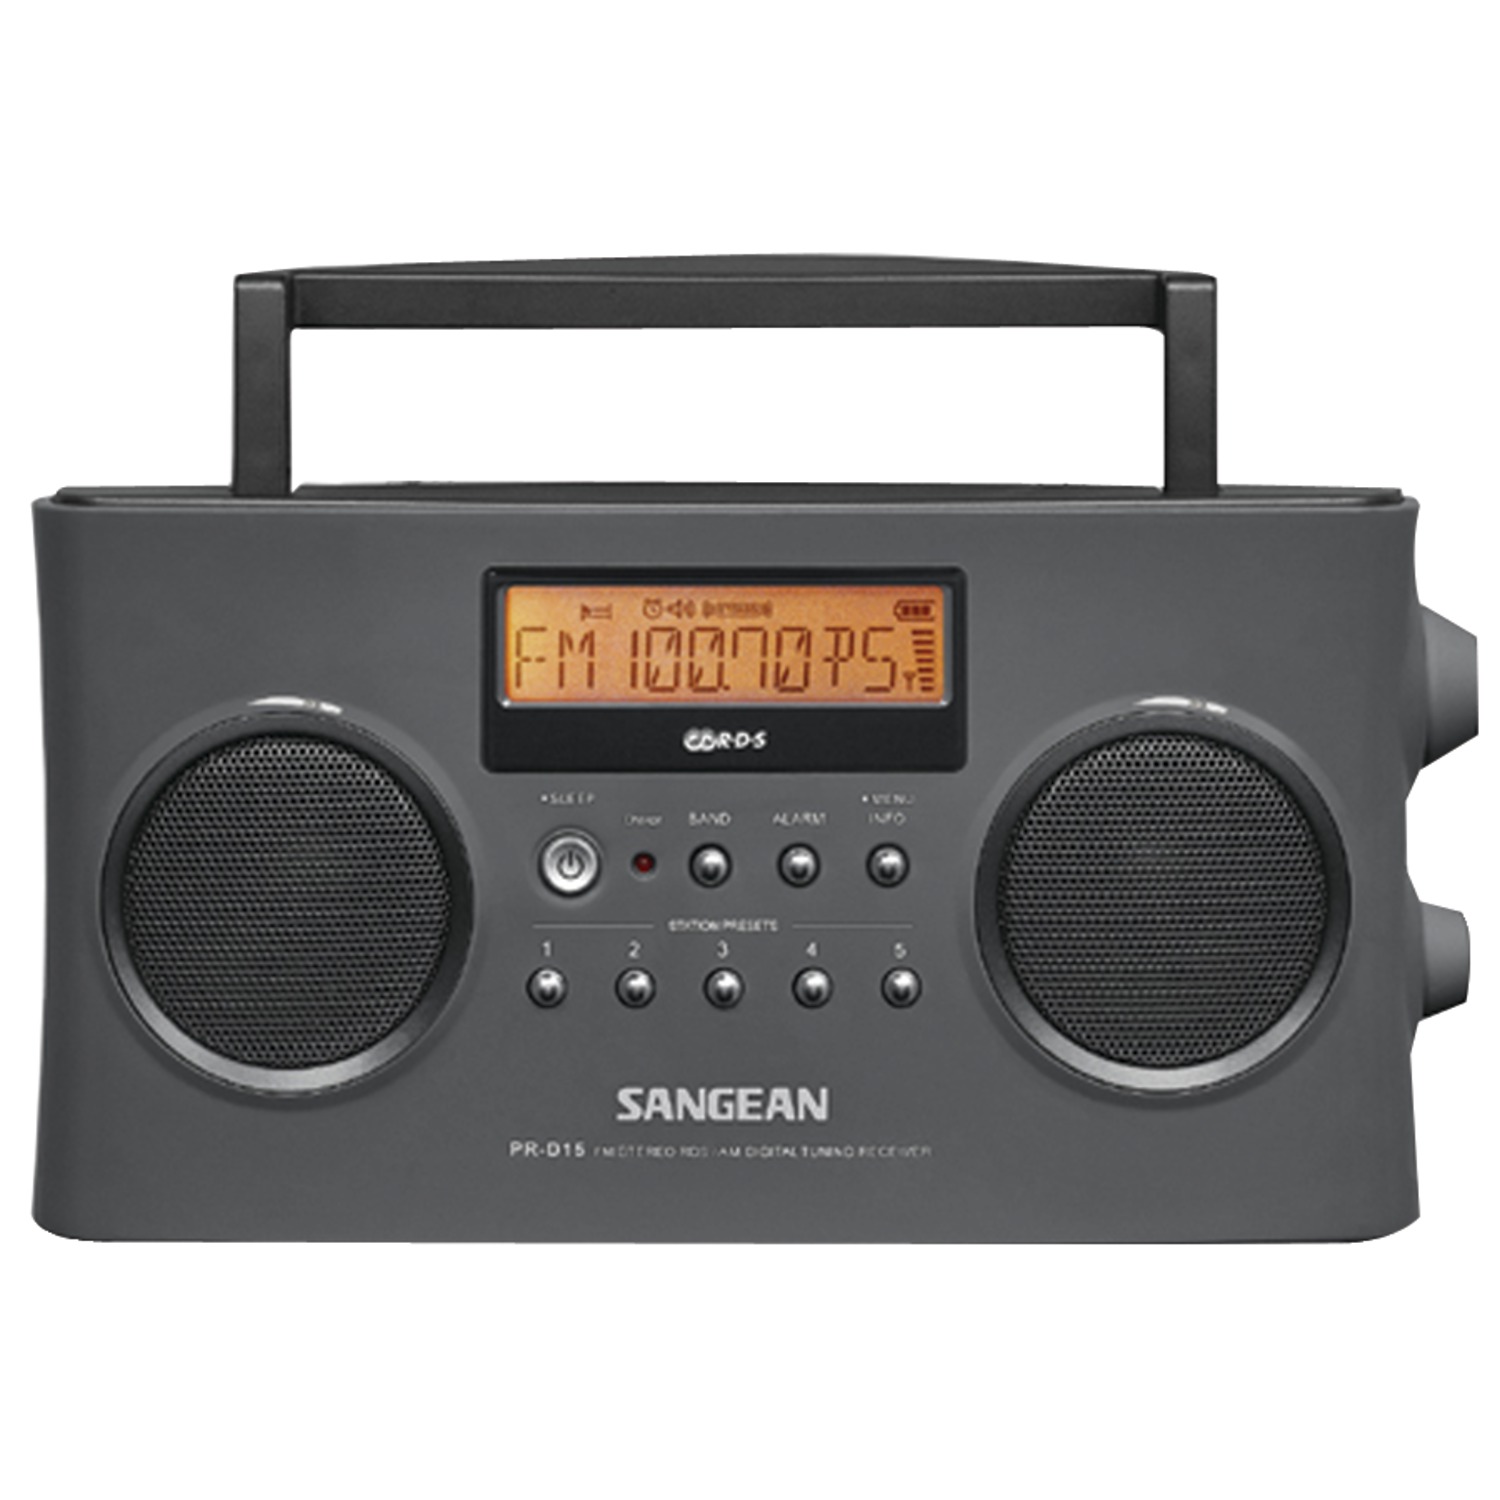 Sangean PR-D15 Digital Portable Stereo RDS Receiver - image 1 of 2